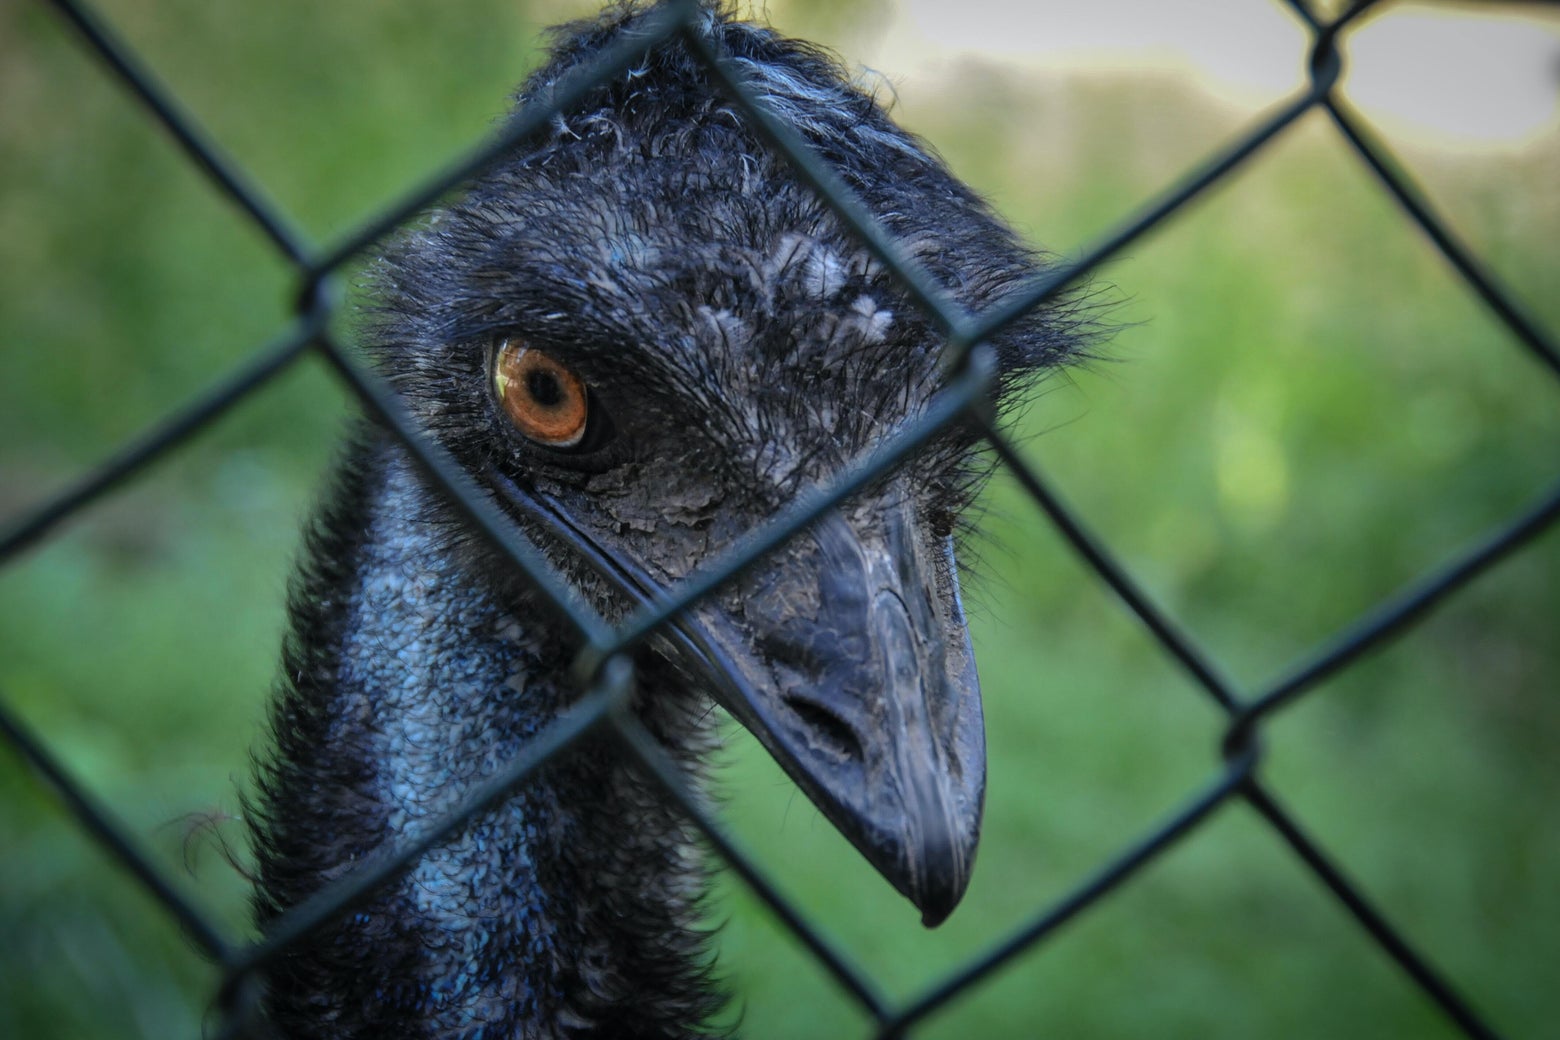 Emmanuel Emu and Avian Influenza: An immunologist explains why hugging a sick bird is bad